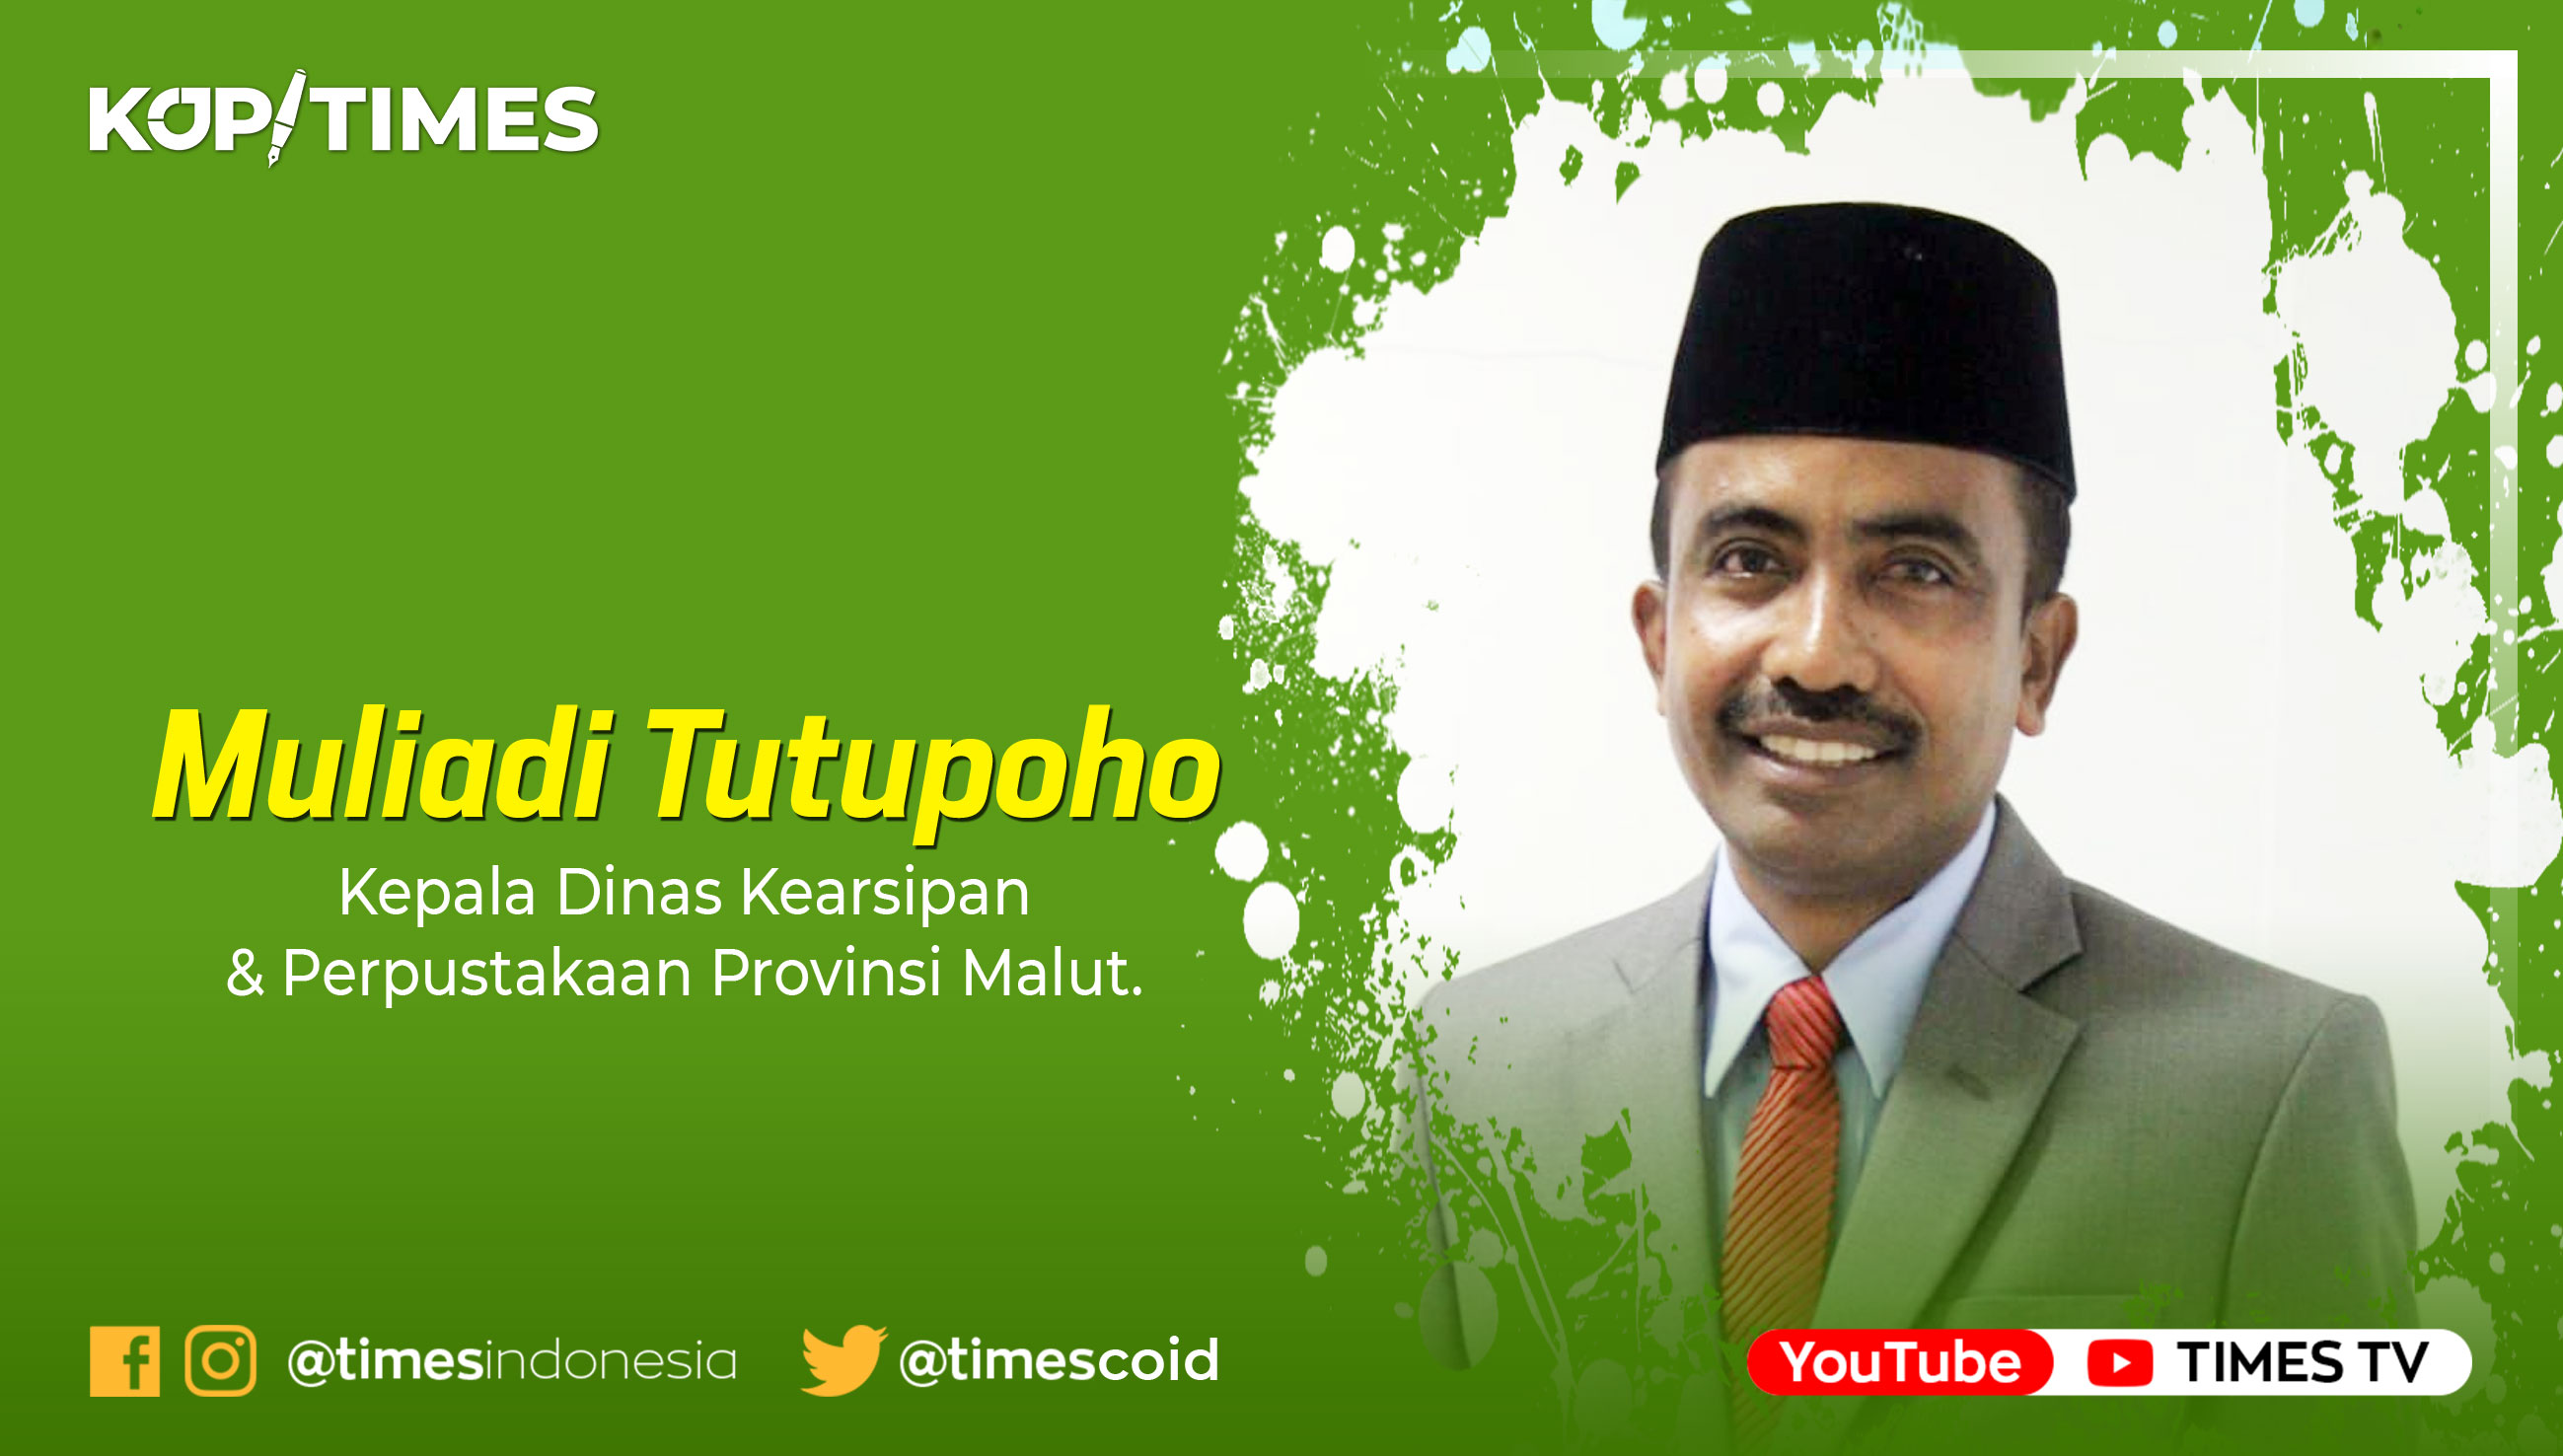 Muliadi Tutupoho, Kepala Dinas Kearsipan & Perpustakaan Provinsi Malut.